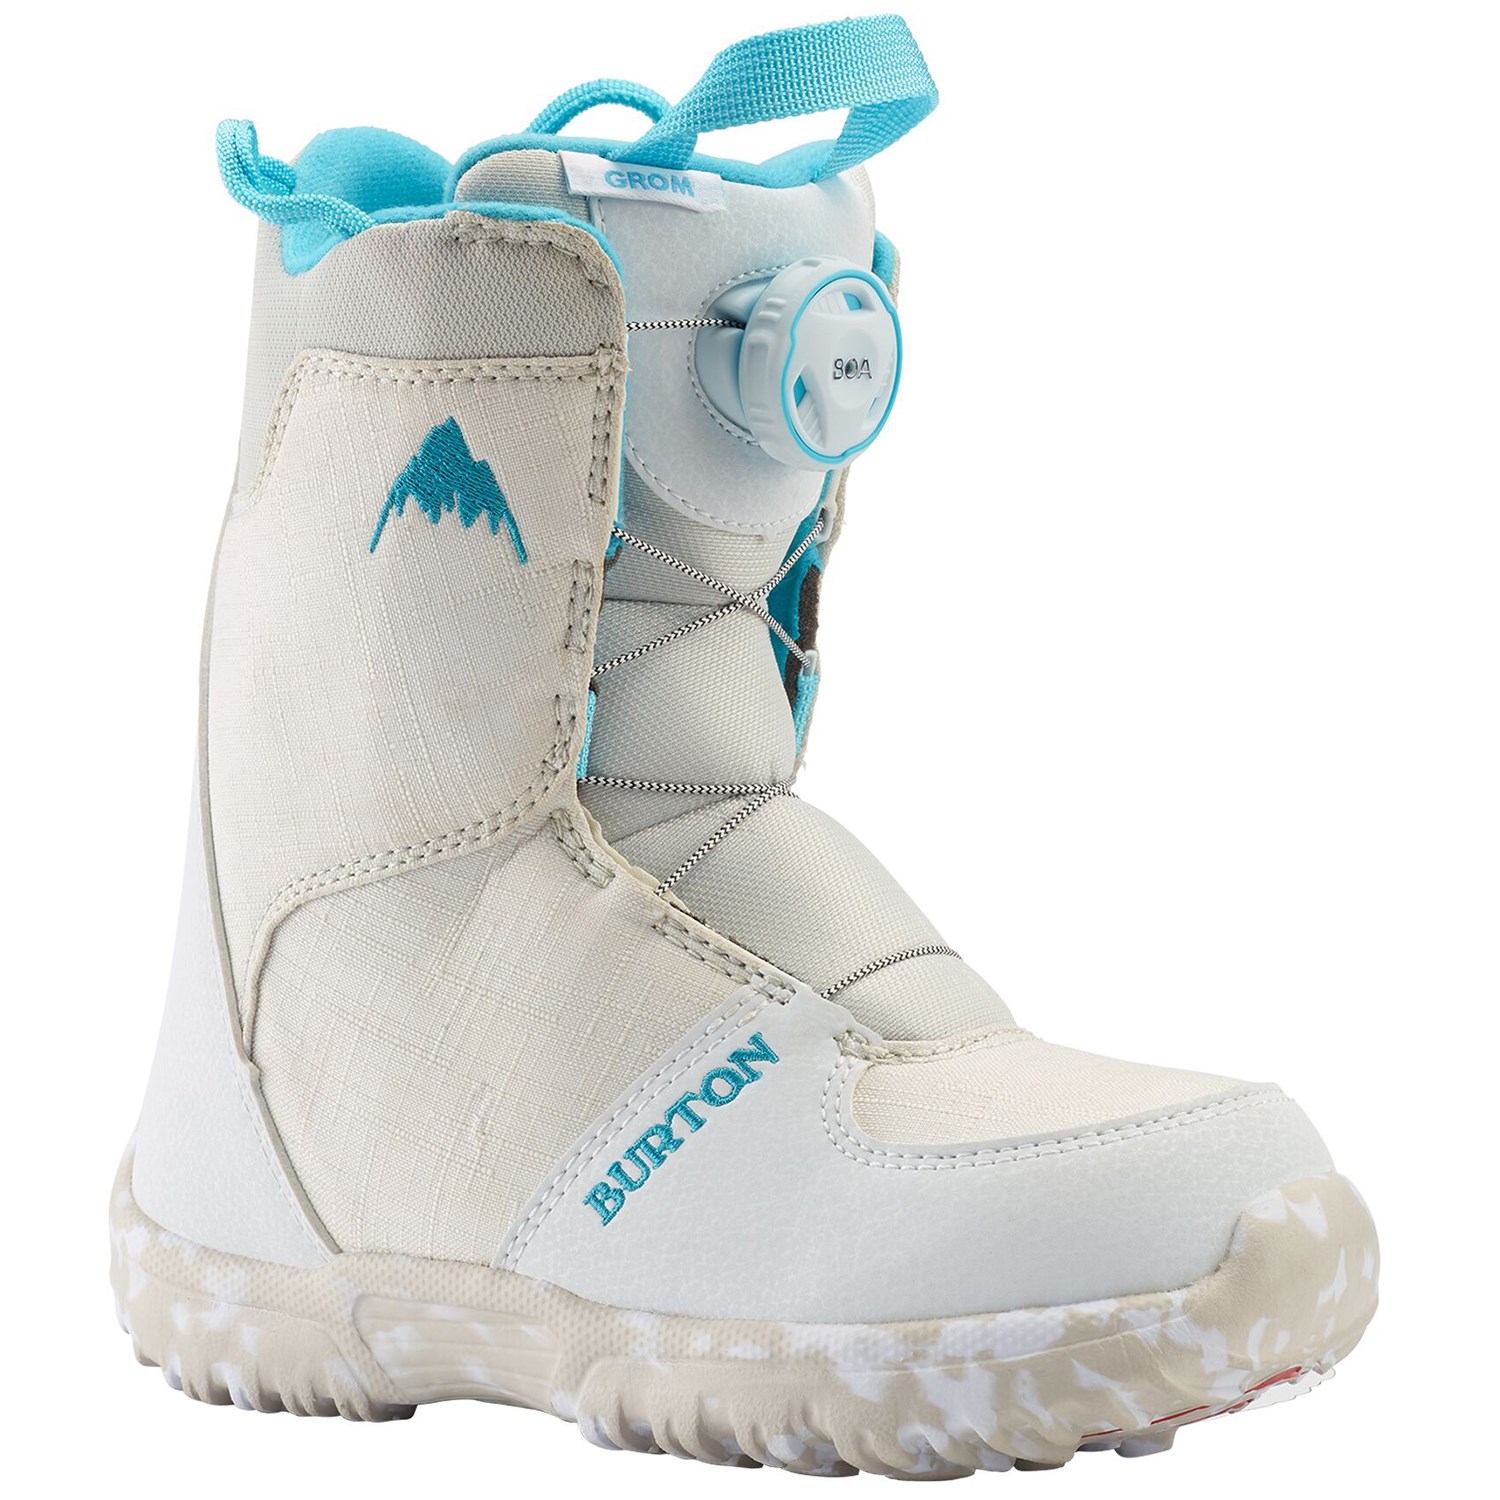 Ботинки для сноуборда Burton Grom Boa, белый детские сноубордические ботинки burton grom boa р 12c white